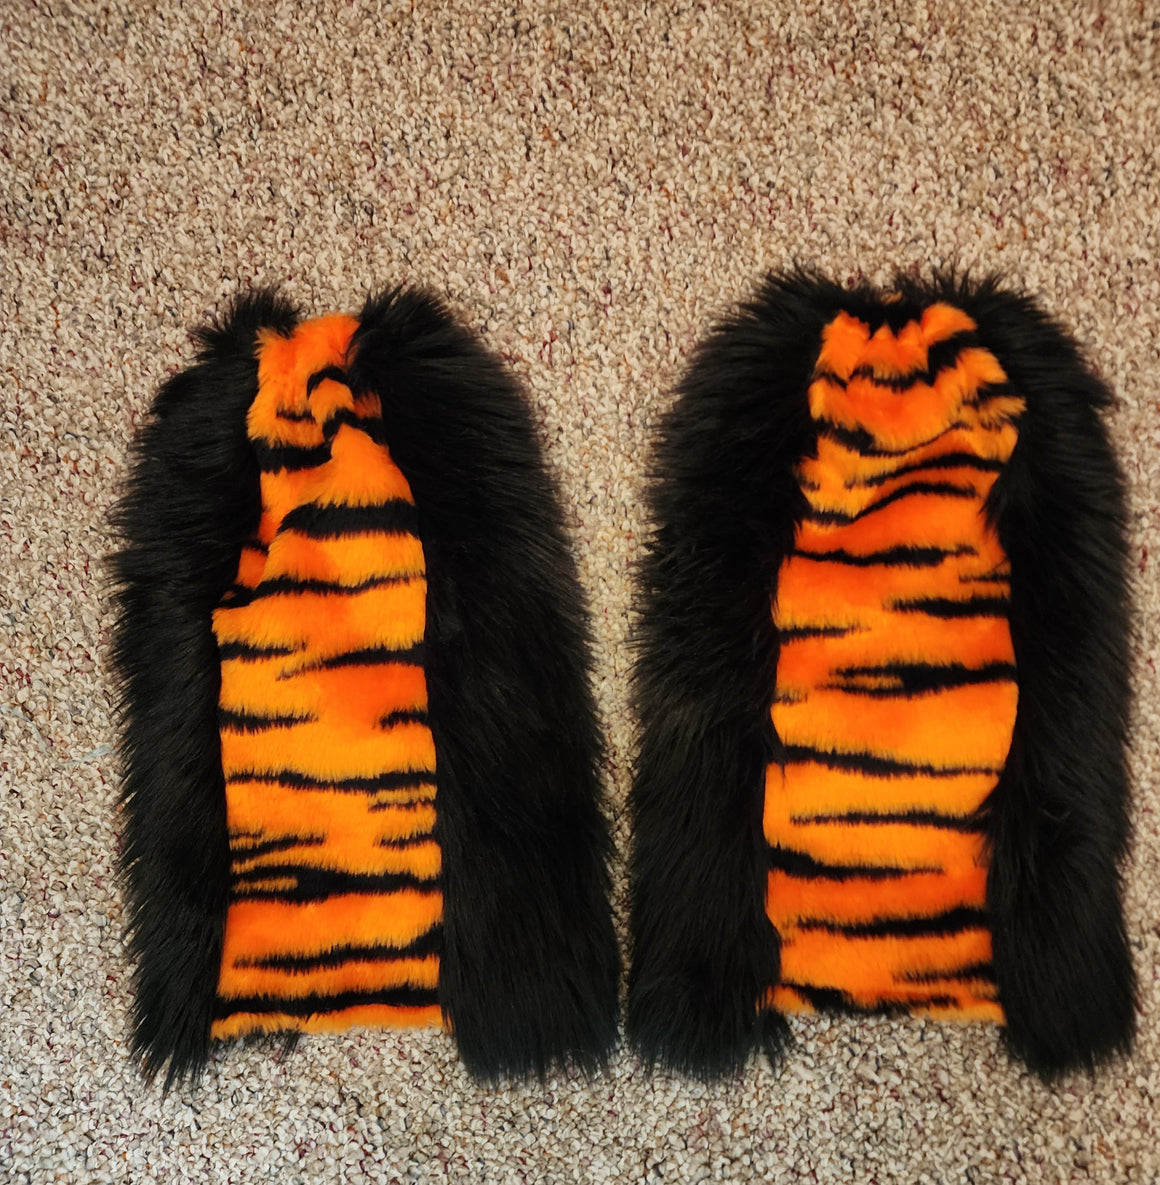 Black & Orange Bengal Striped Faux Fur Leg Warmers - Bengal Leg Warmers